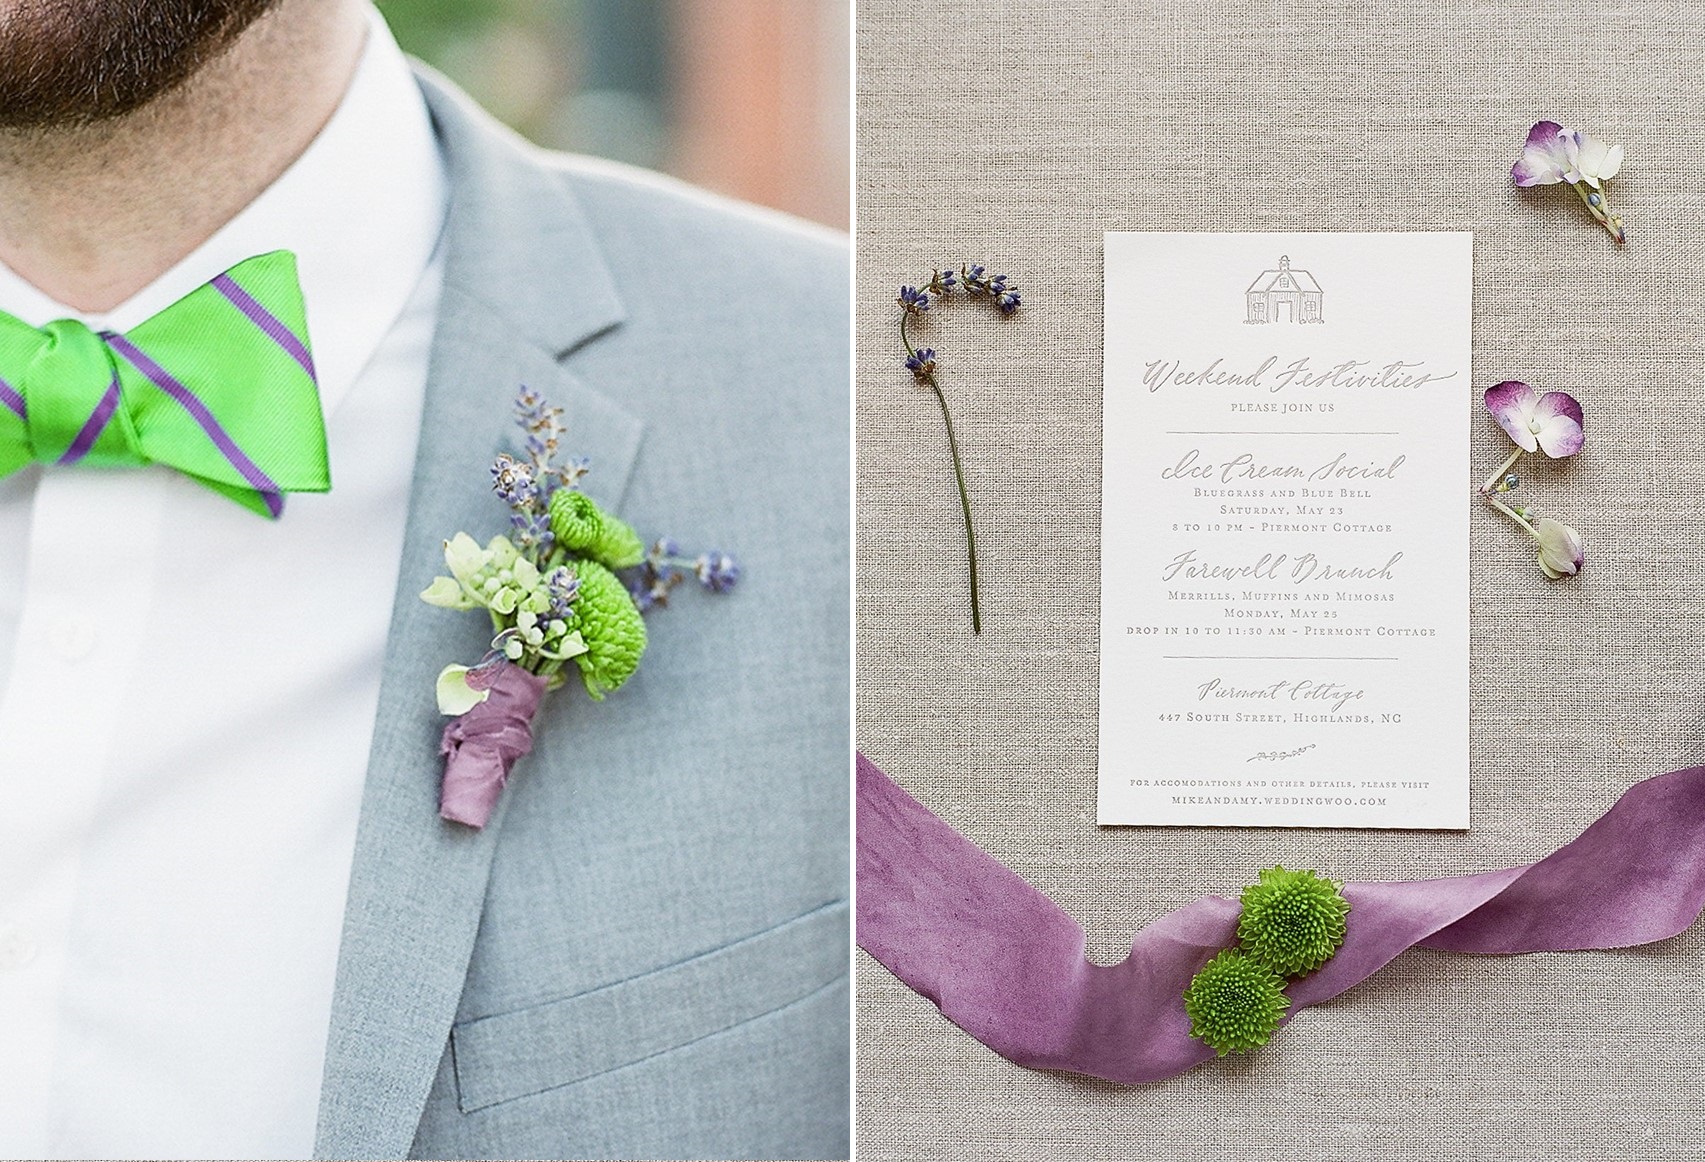 Sweet 1950s Inspired Wedding Ideas in Lavender & Green